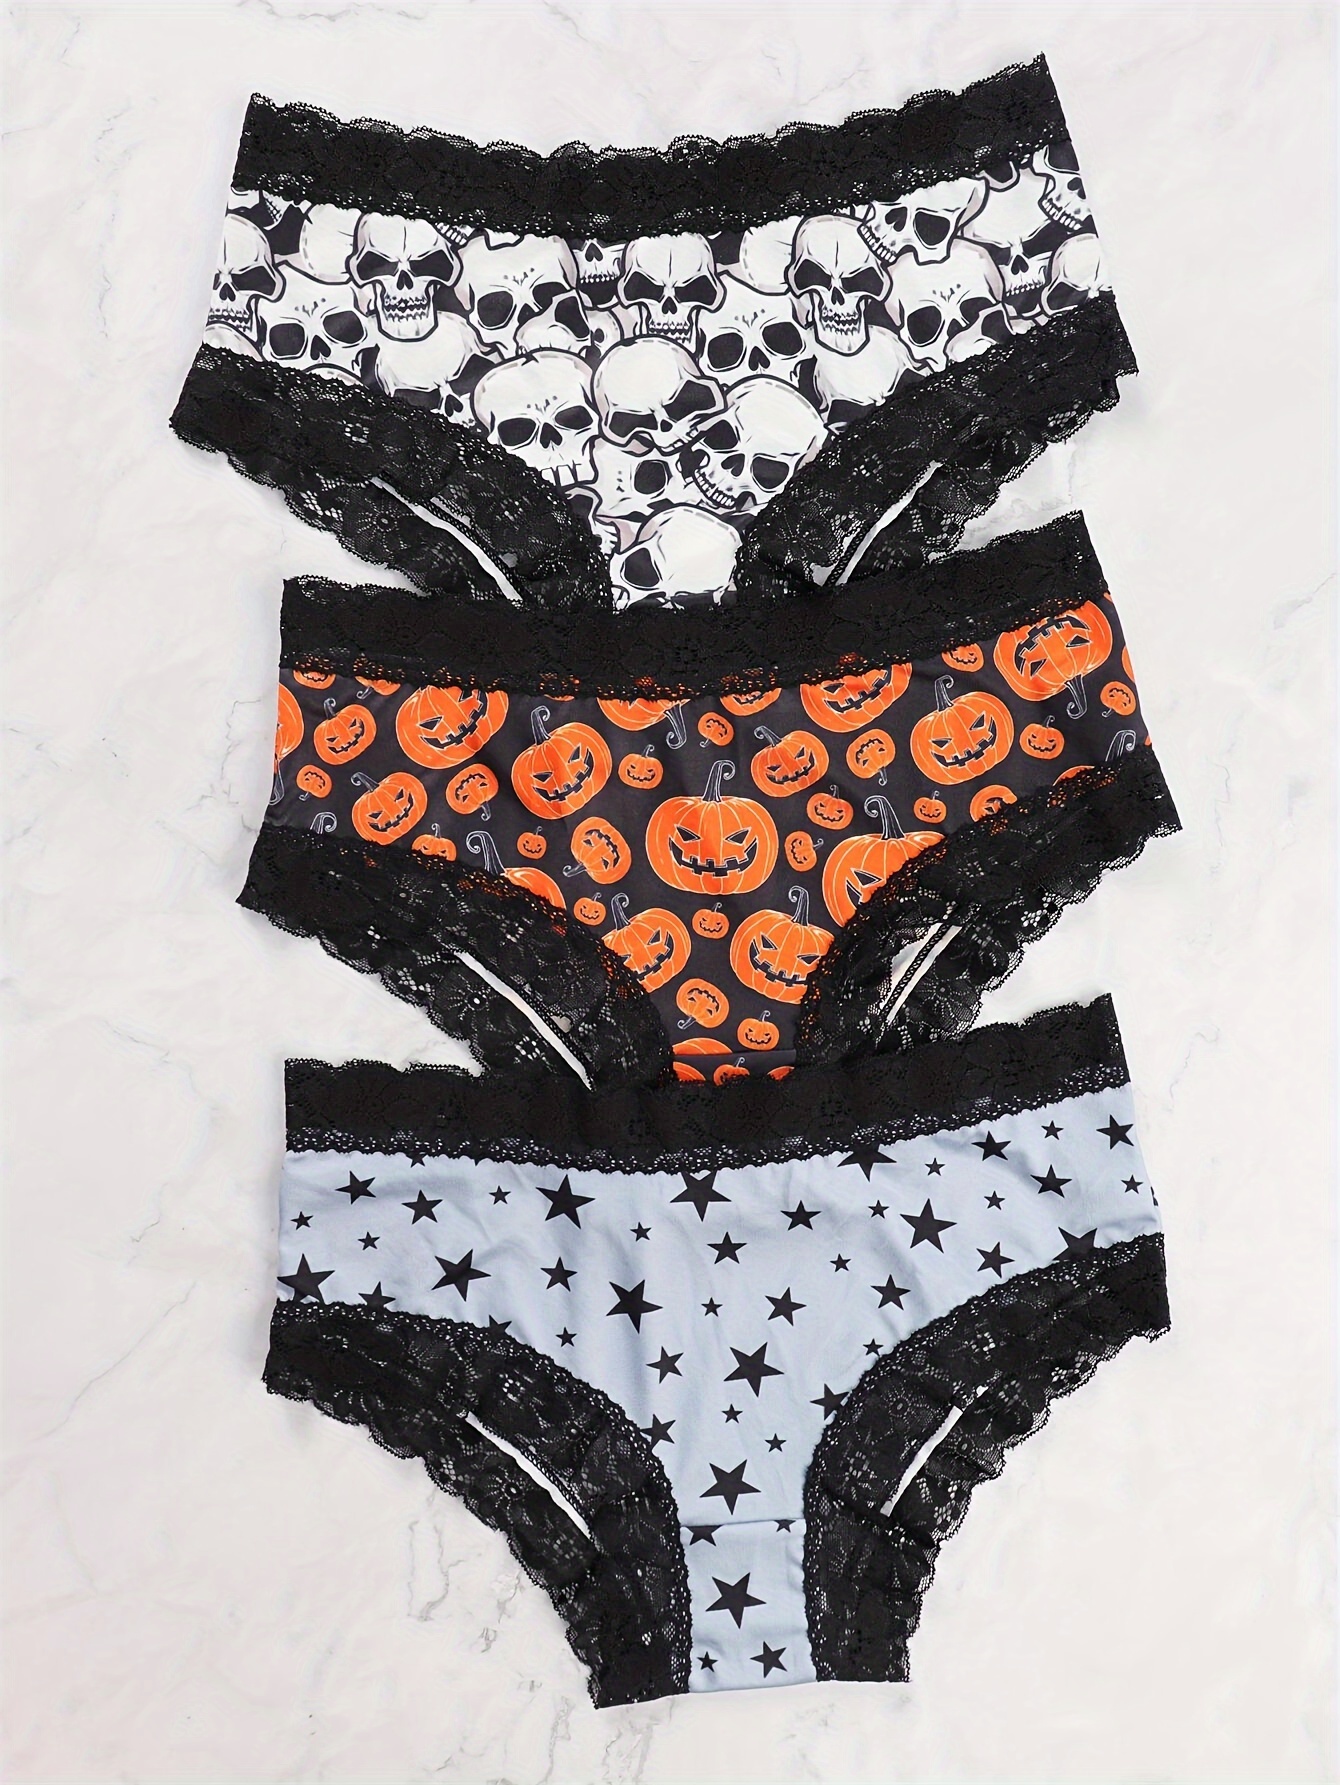 Sexy Skull Print Printed Panty DeanFire 92% Polyester & 8% Spandex Plus  Size Halloween Underwear From Xmlongbida, $5.61